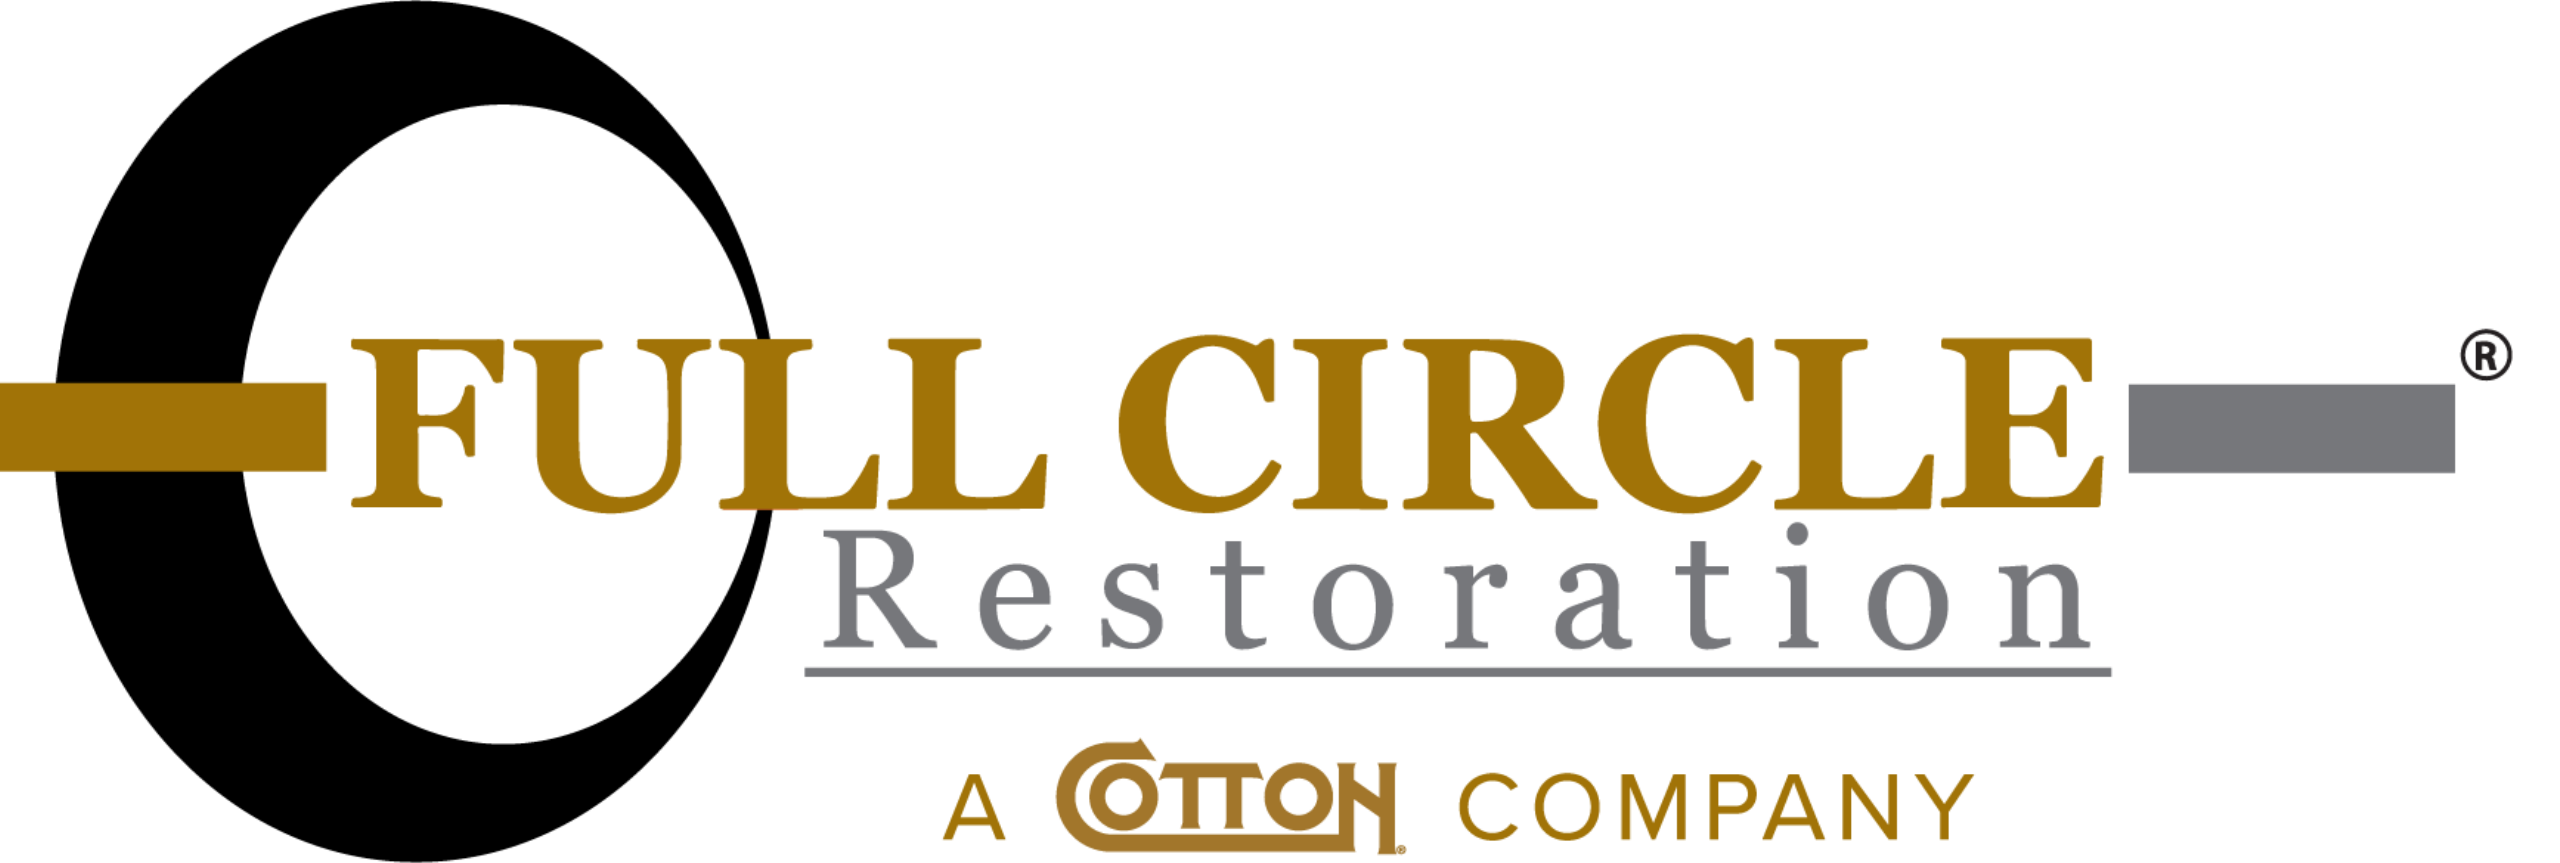 Full Circle Restoration & Construction Services, LLC Logo